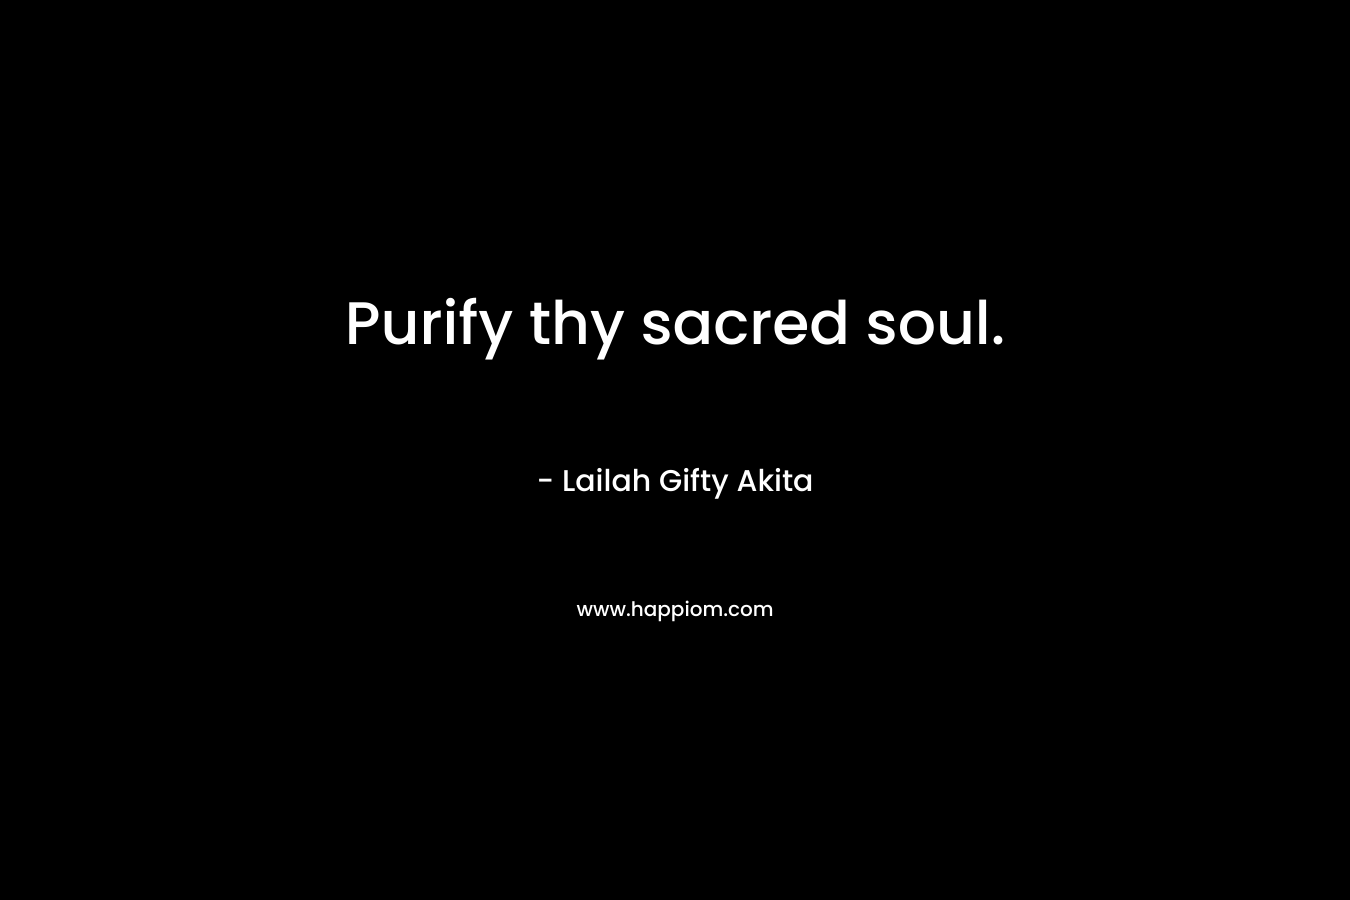 Purify thy sacred soul.